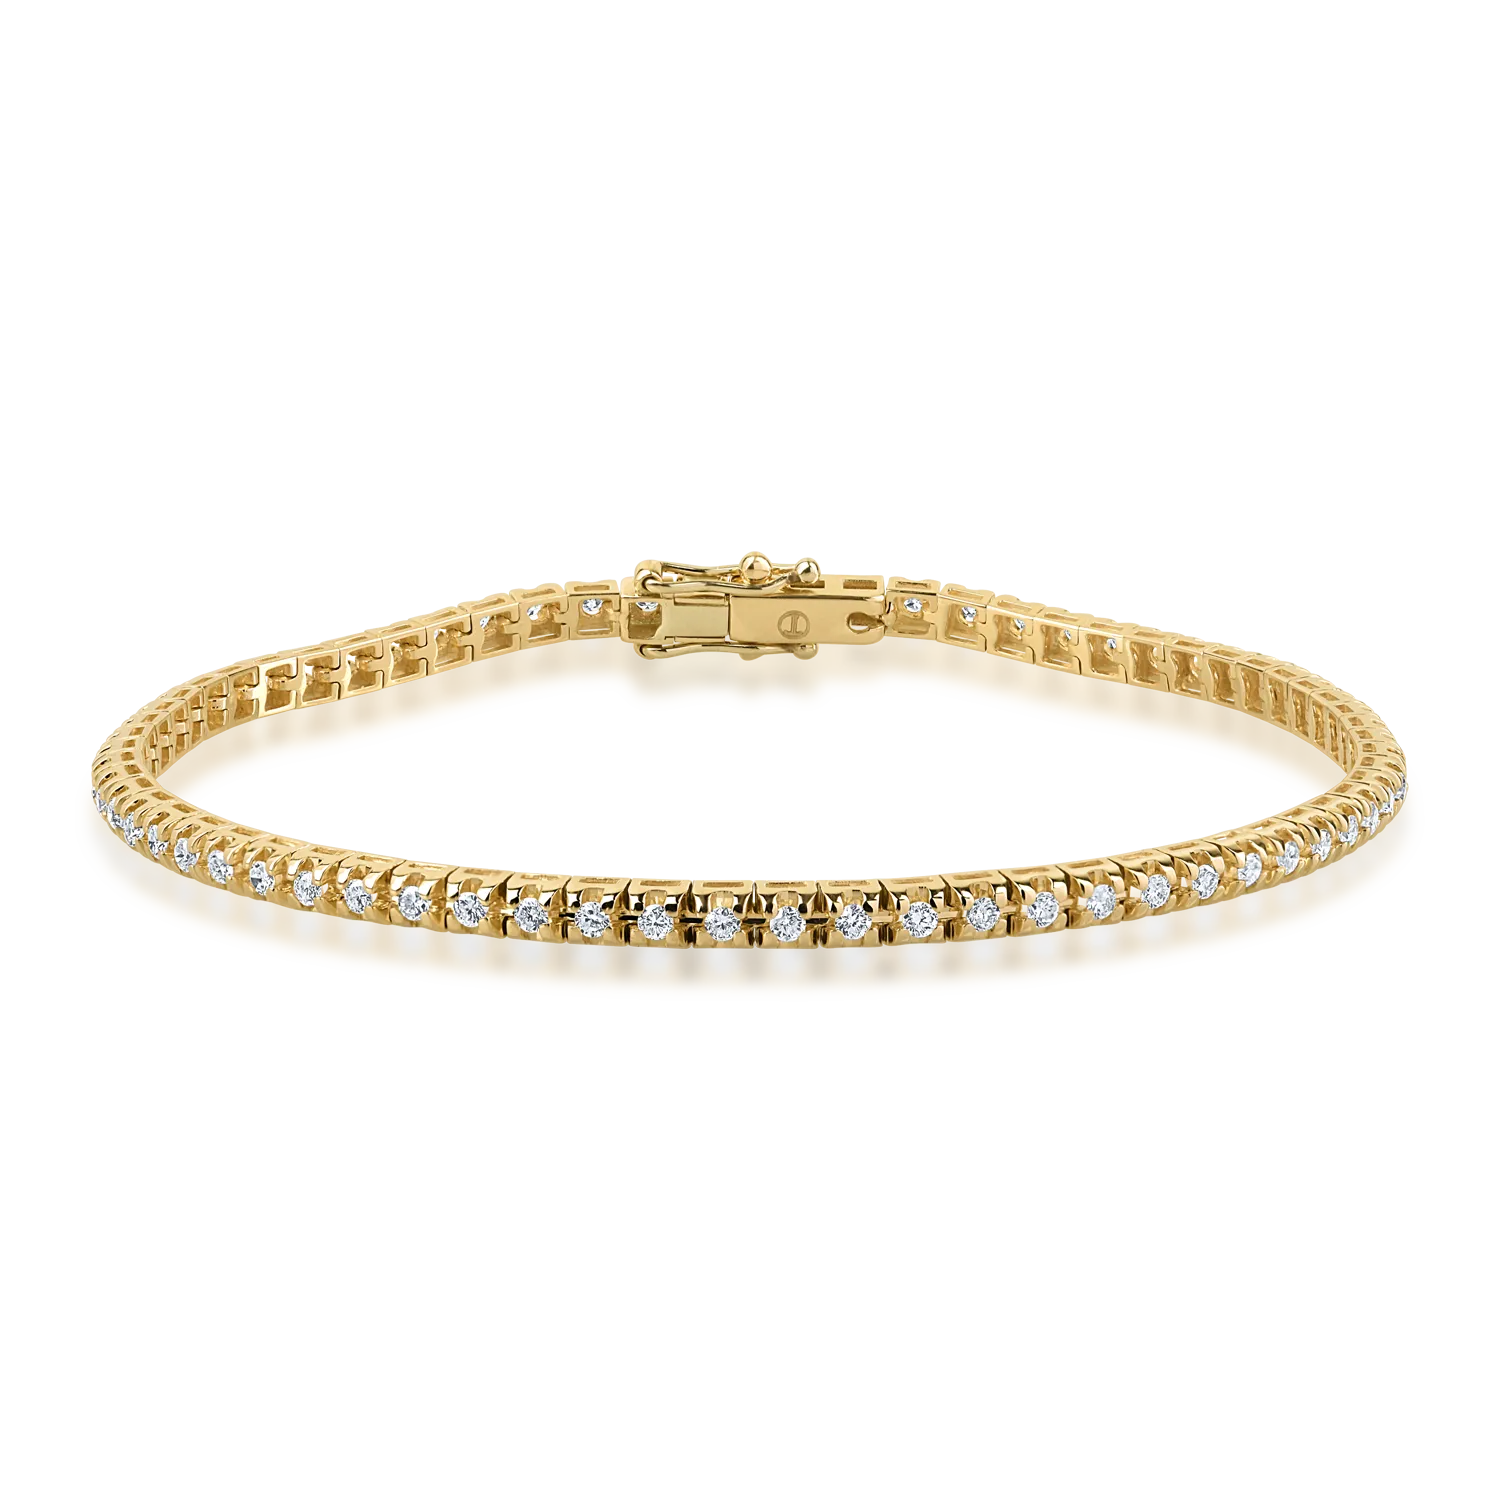 Yellow gold tennis bracelet with 1.3ct diamonds